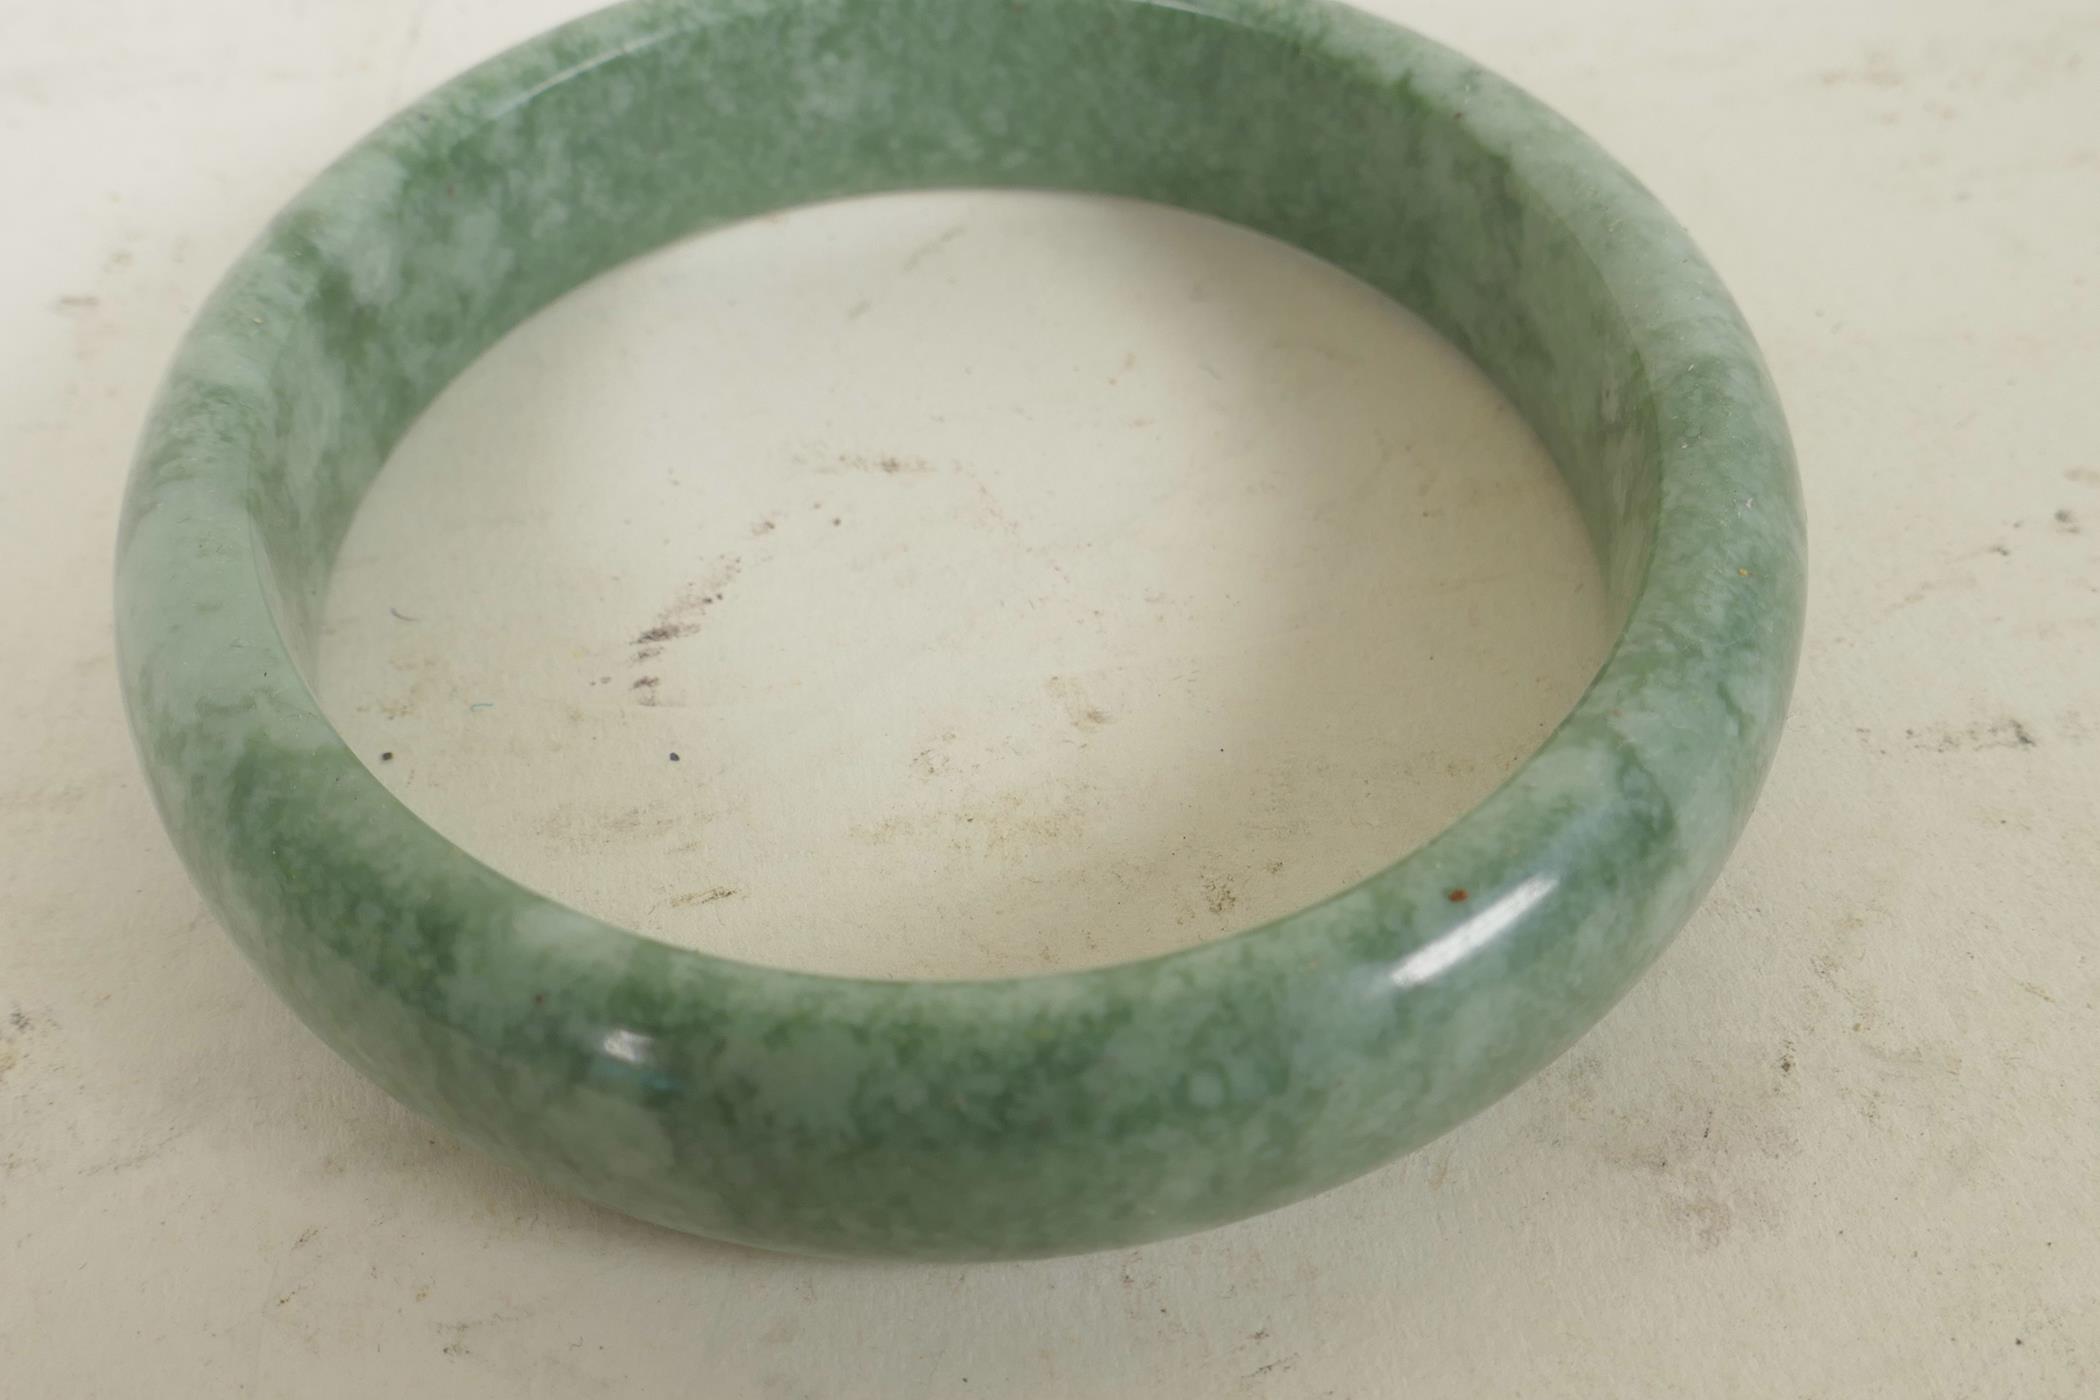 A Chinese green hardstone bangle, 3" diameter - Image 2 of 2